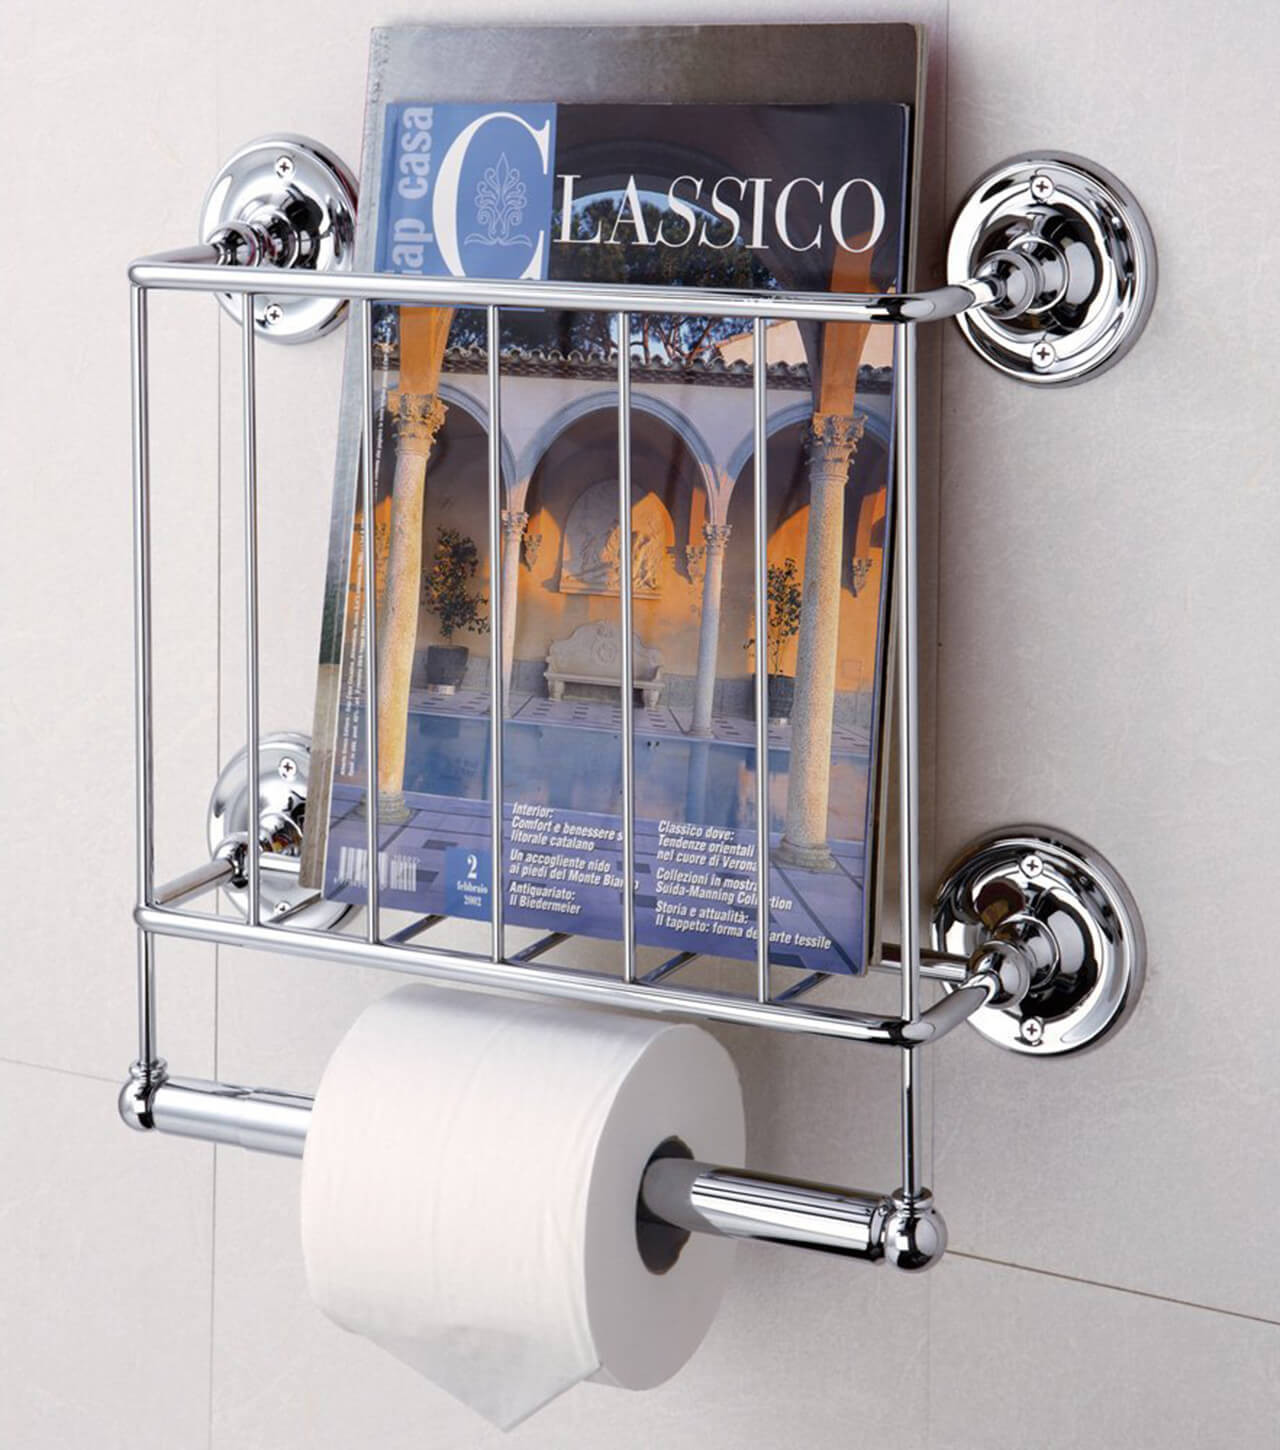 Wall Mounted Bathroom Magazine Rack
 23 Best Bathroom Magazine Rack Ideas to Save Space in 2020